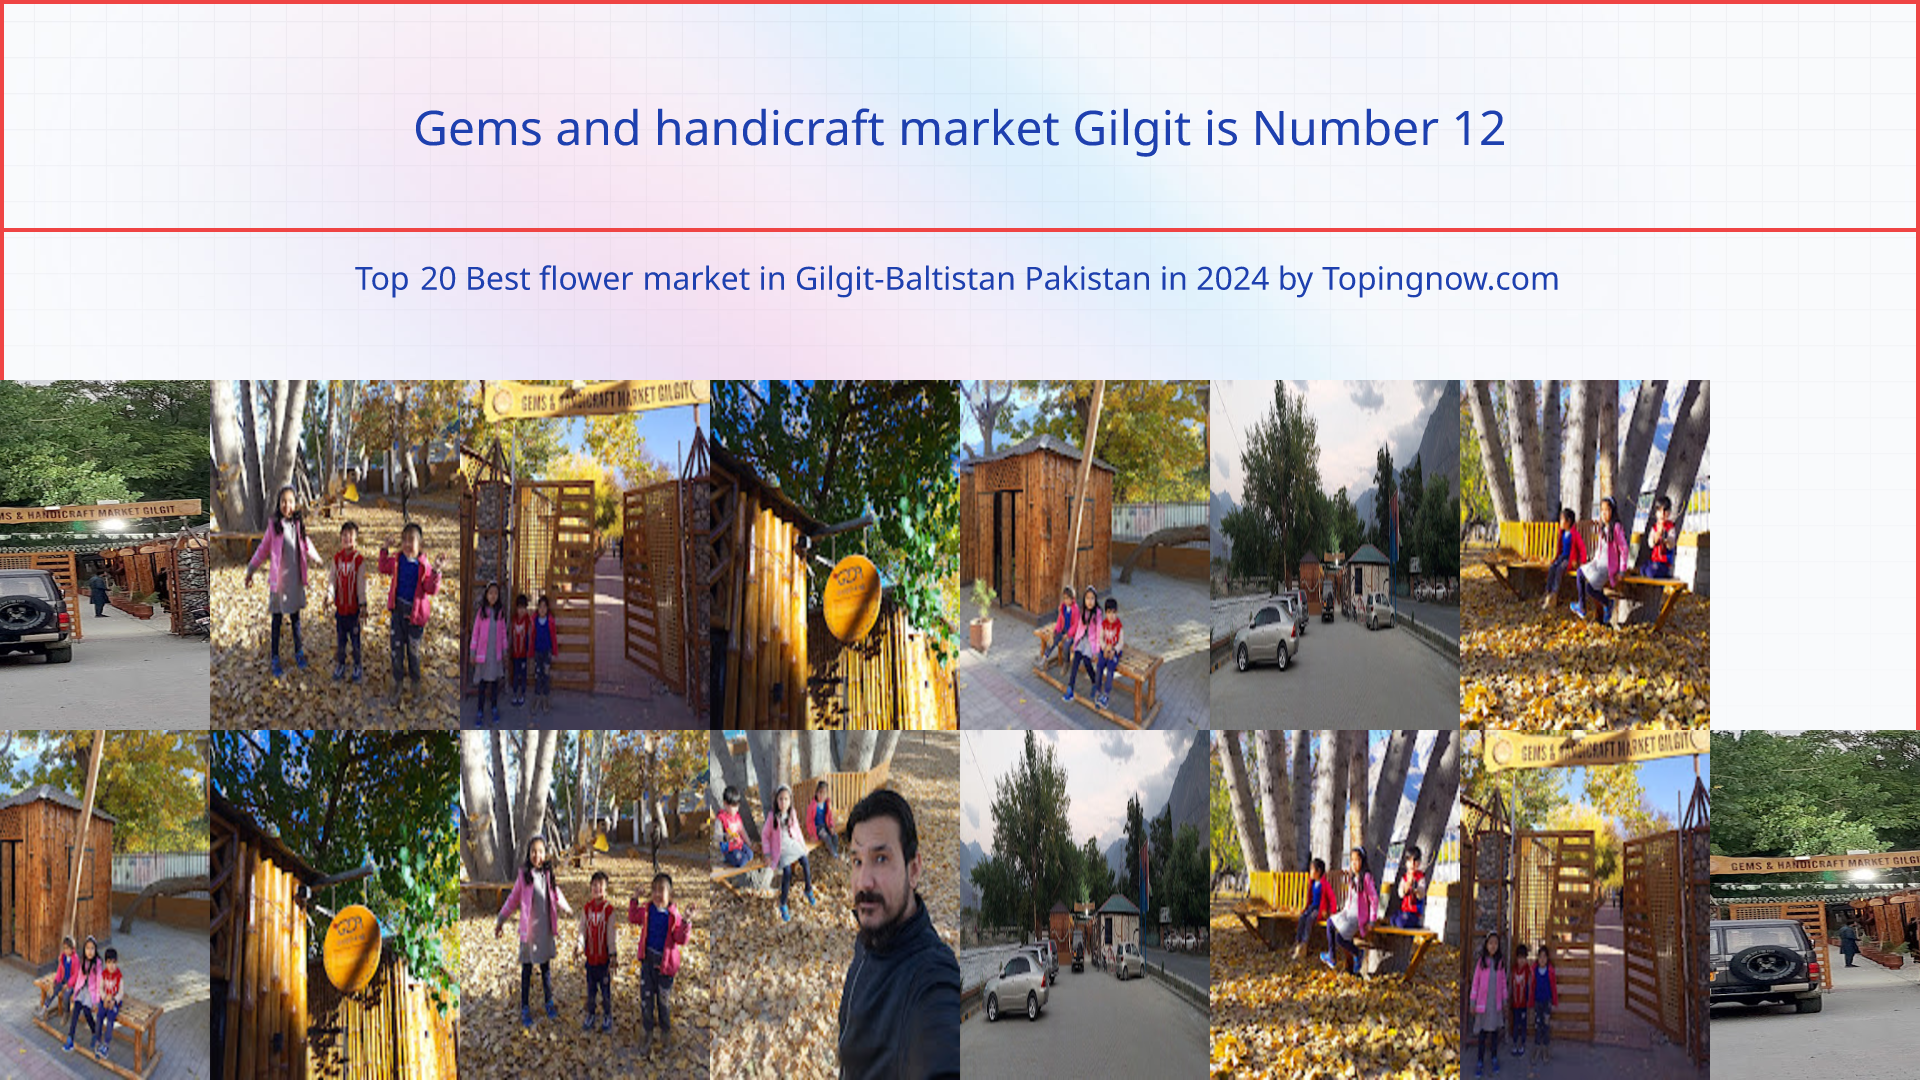 Gems and handicraft market Gilgit: Top 20 Best flower market in Gilgit-Baltistan Pakistan in 2024